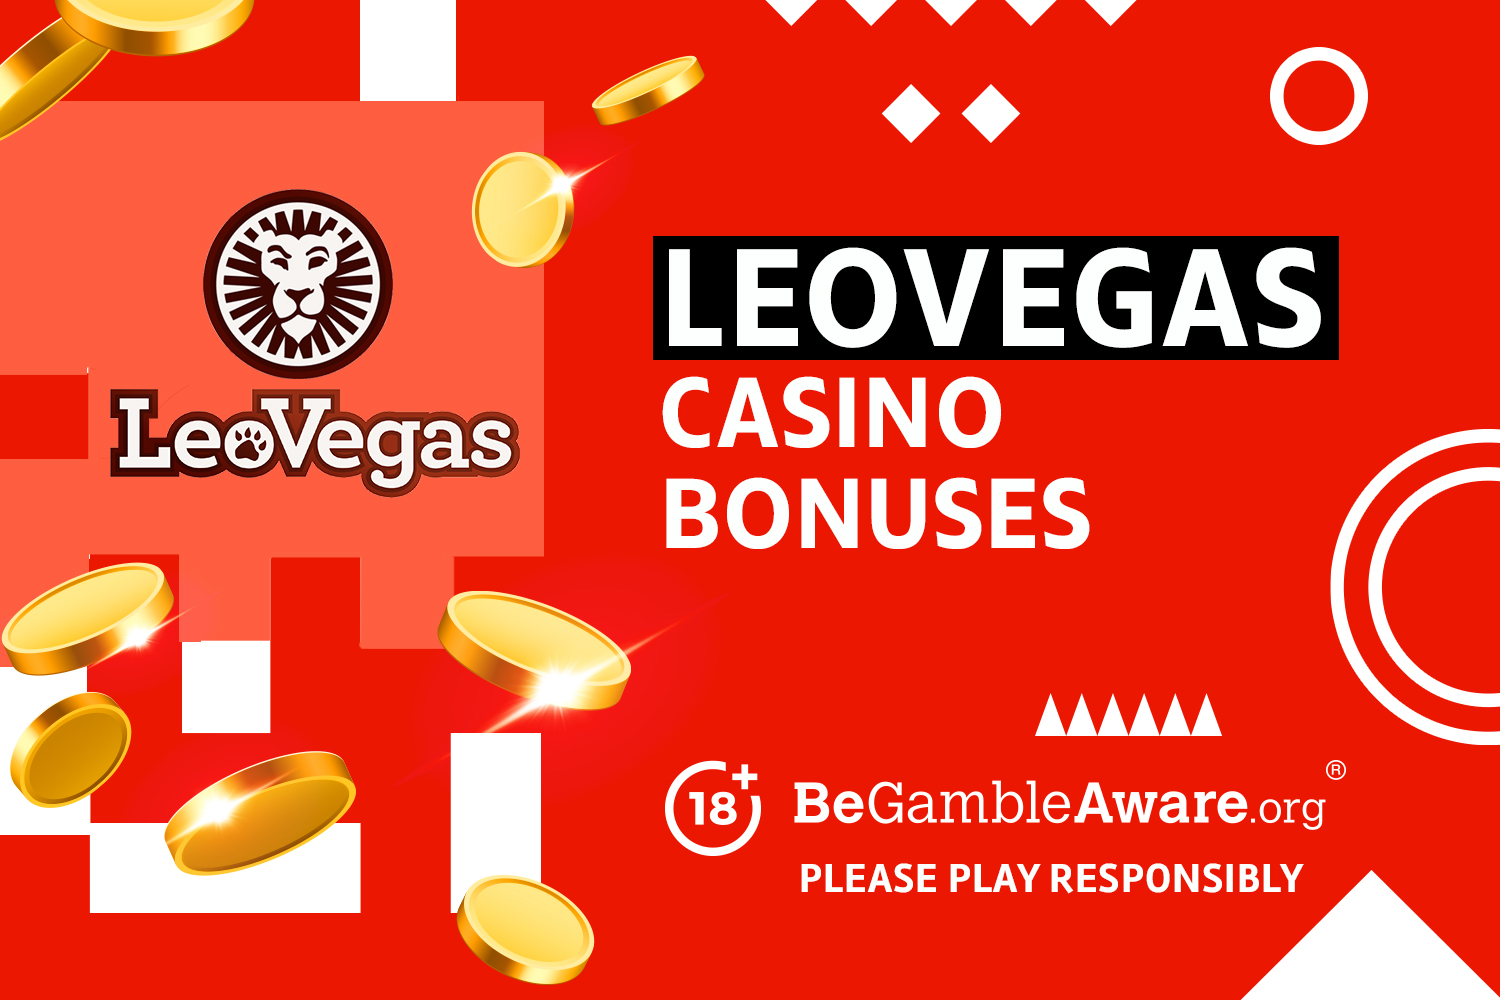 LeoVegas casino bonuses. 18+ BeGambleAware.org Please play responsibly.